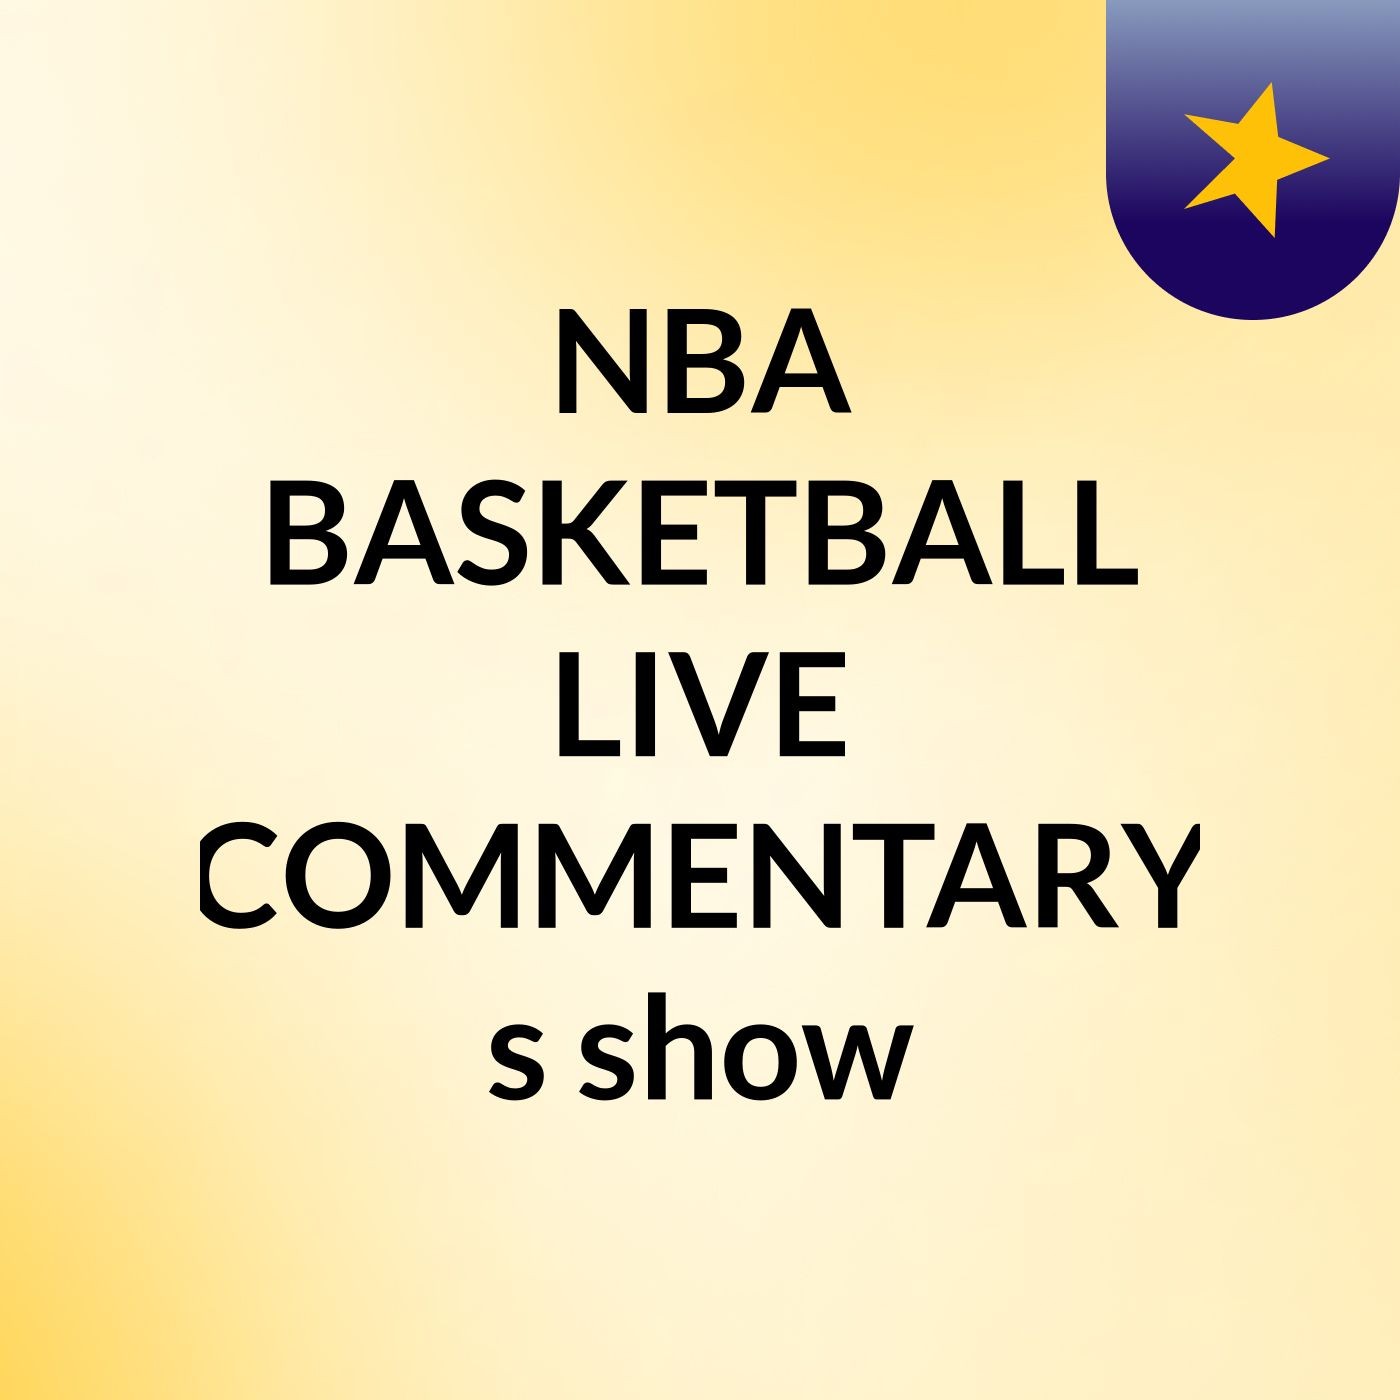 NBA BASKETBALL LIVE COMMENTARYs show